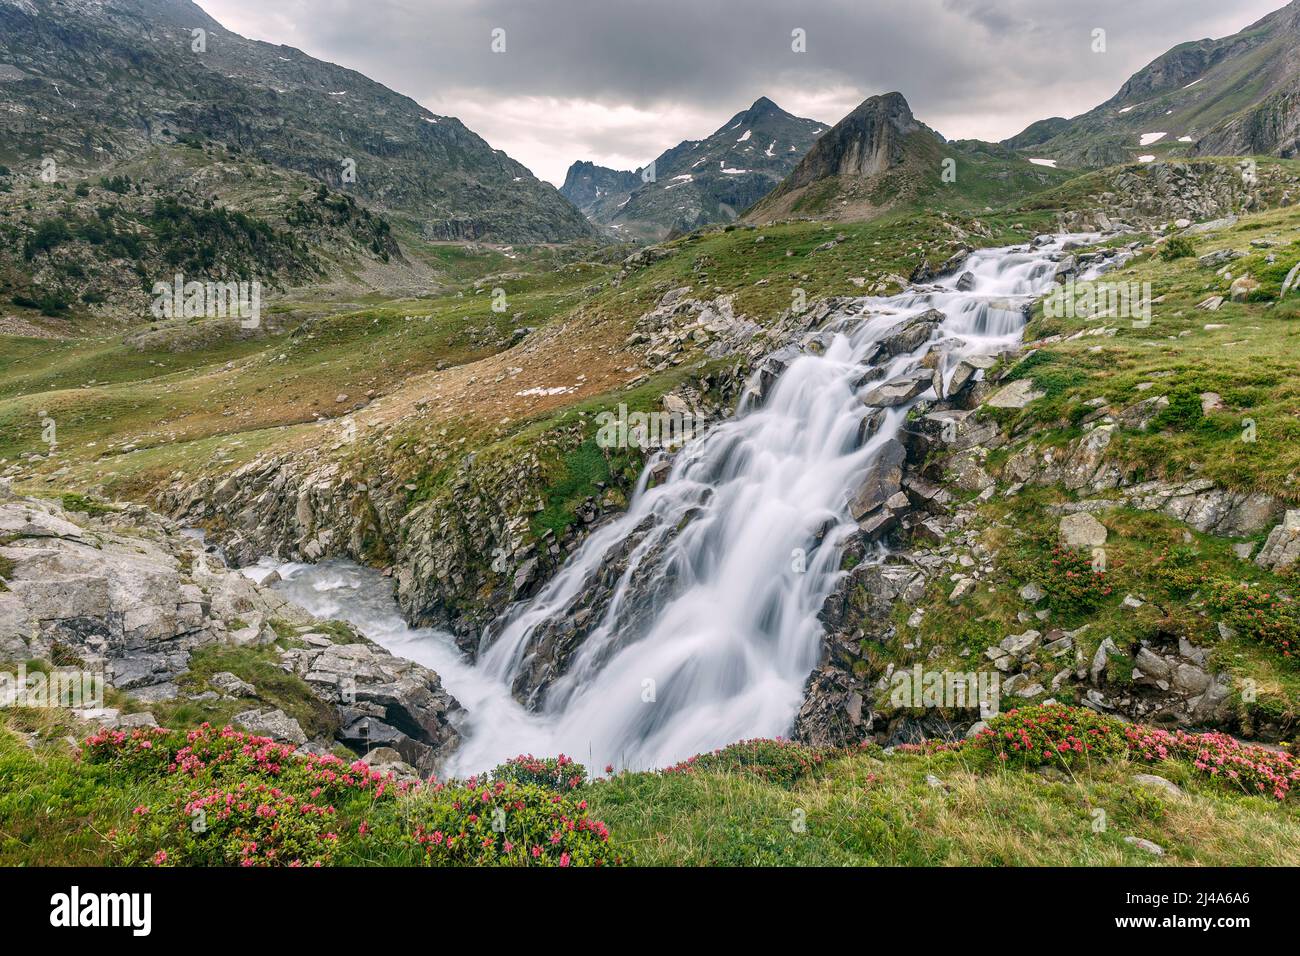 Aguas limpias river waterfall at Tena valley, spanish pyrenees Stock Photo